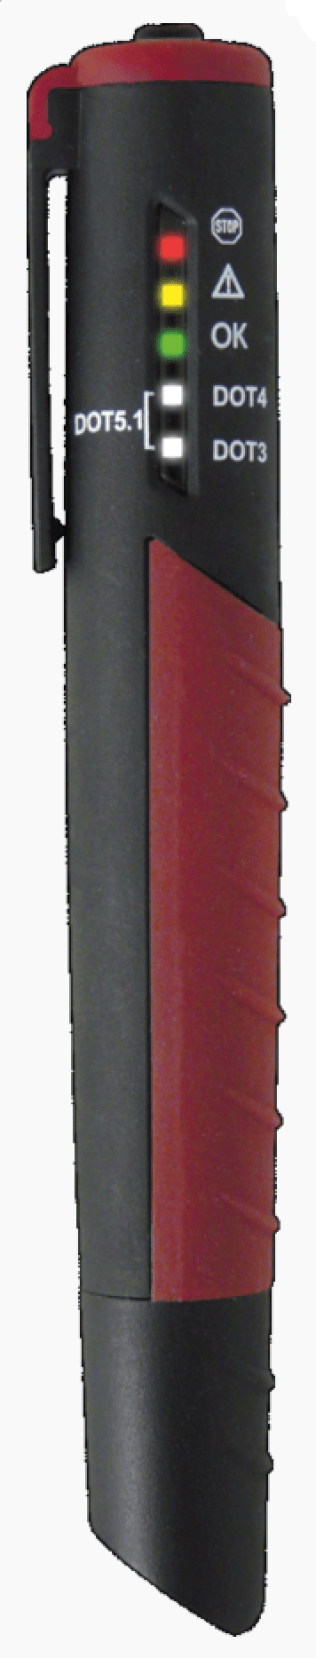 Testboy 55 Digital Brake Fluid Tester (DOT 3, 4, 5.1) - IC-TB55